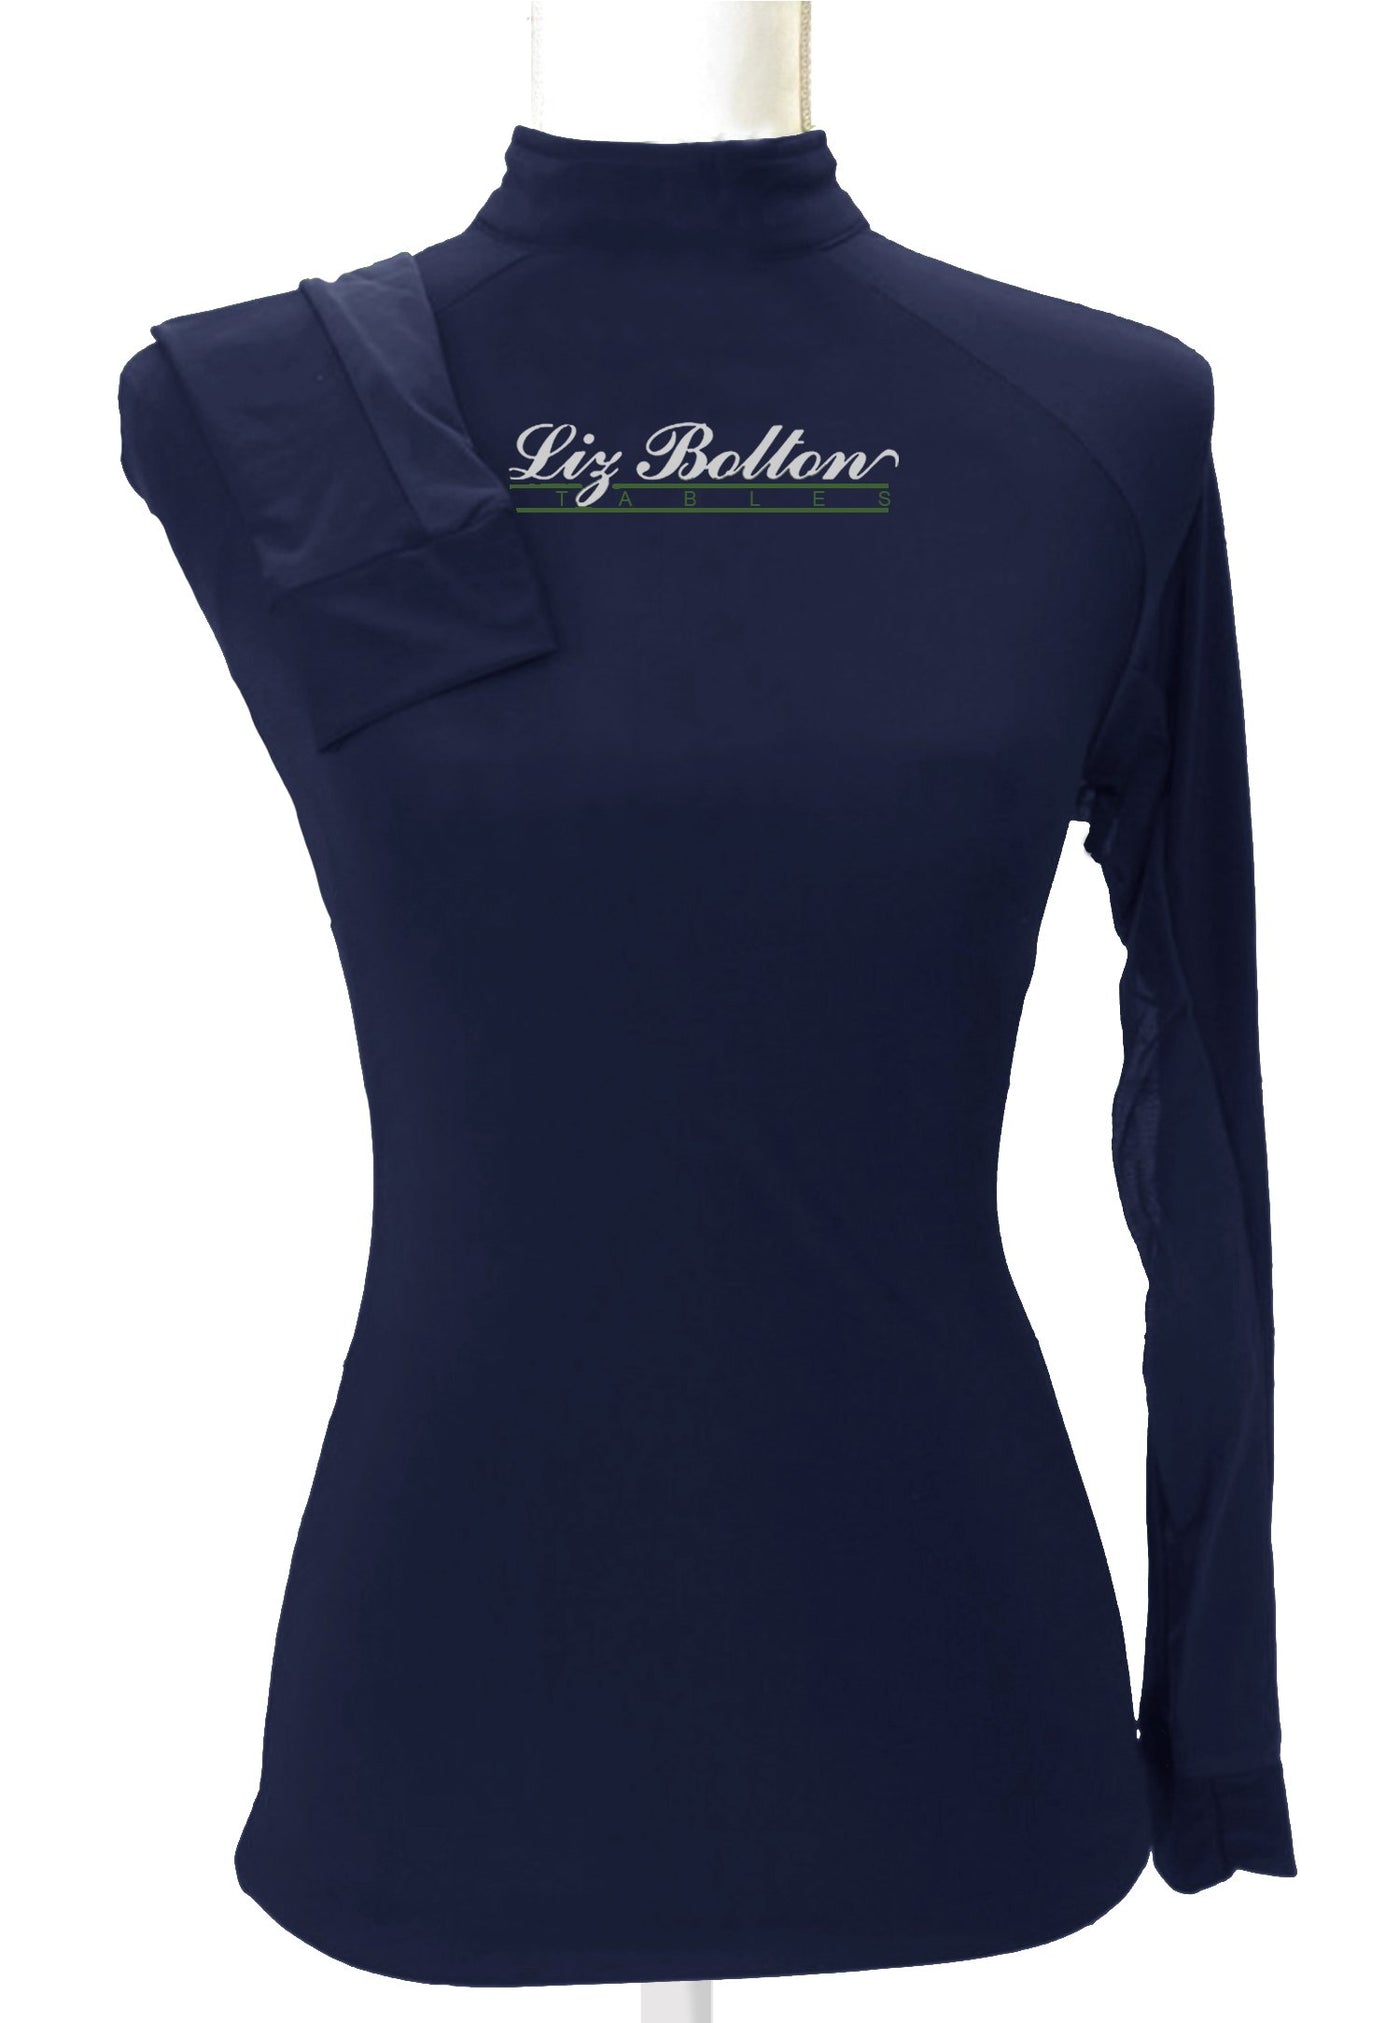 Liz Bolton Stables Custom Sun Shirt - Navy      Adult + Youth Sizes